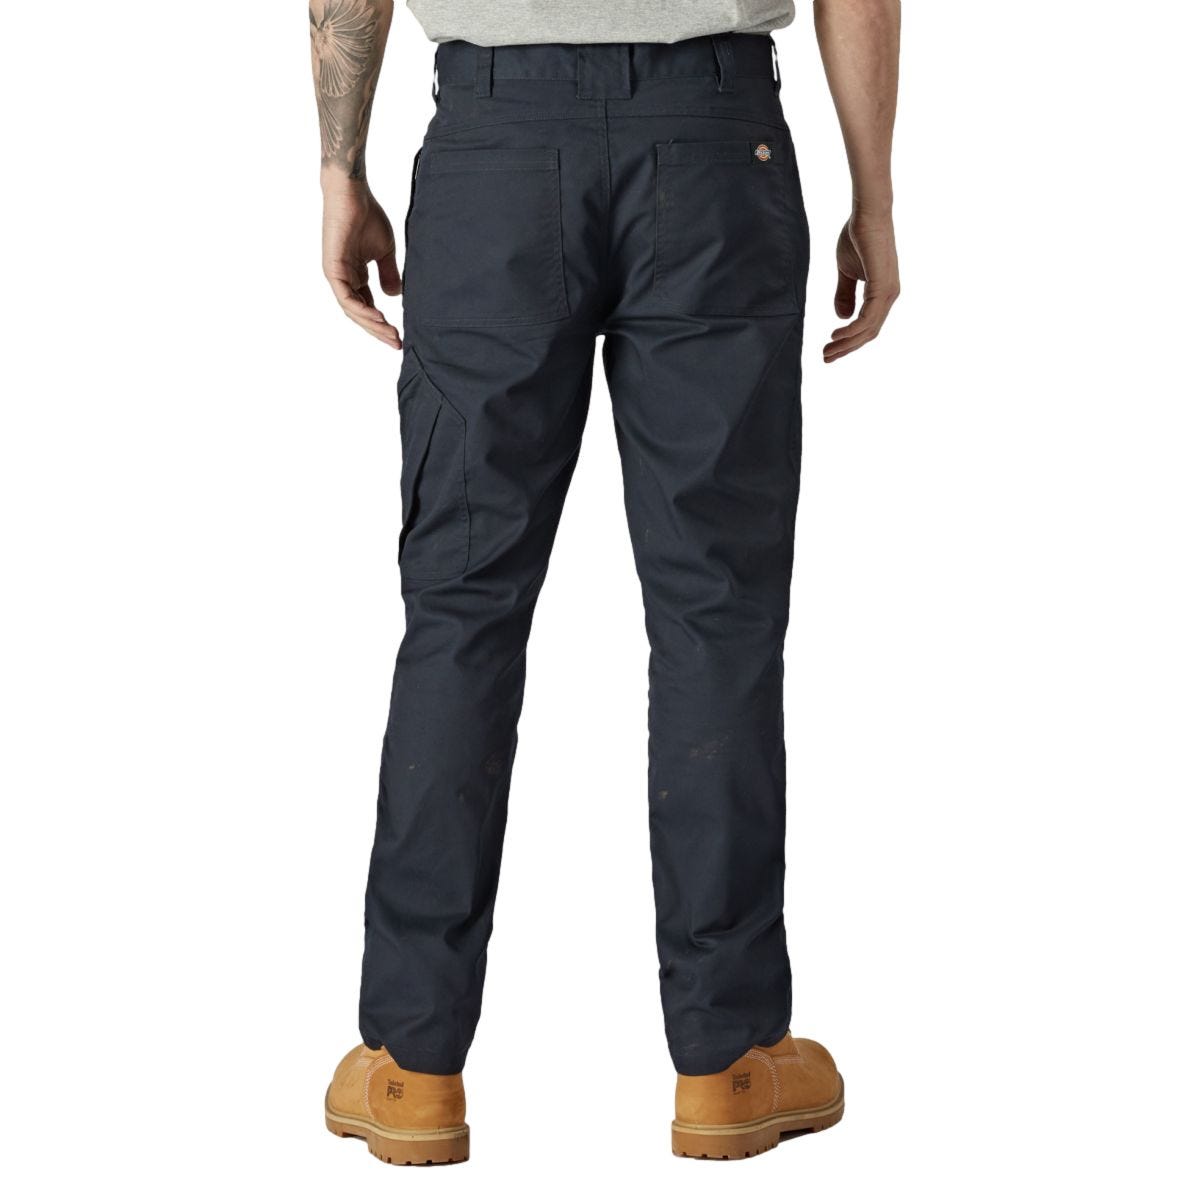 Pantalon de travail Action Flex bleu marine - Dickies - Taille 38 1